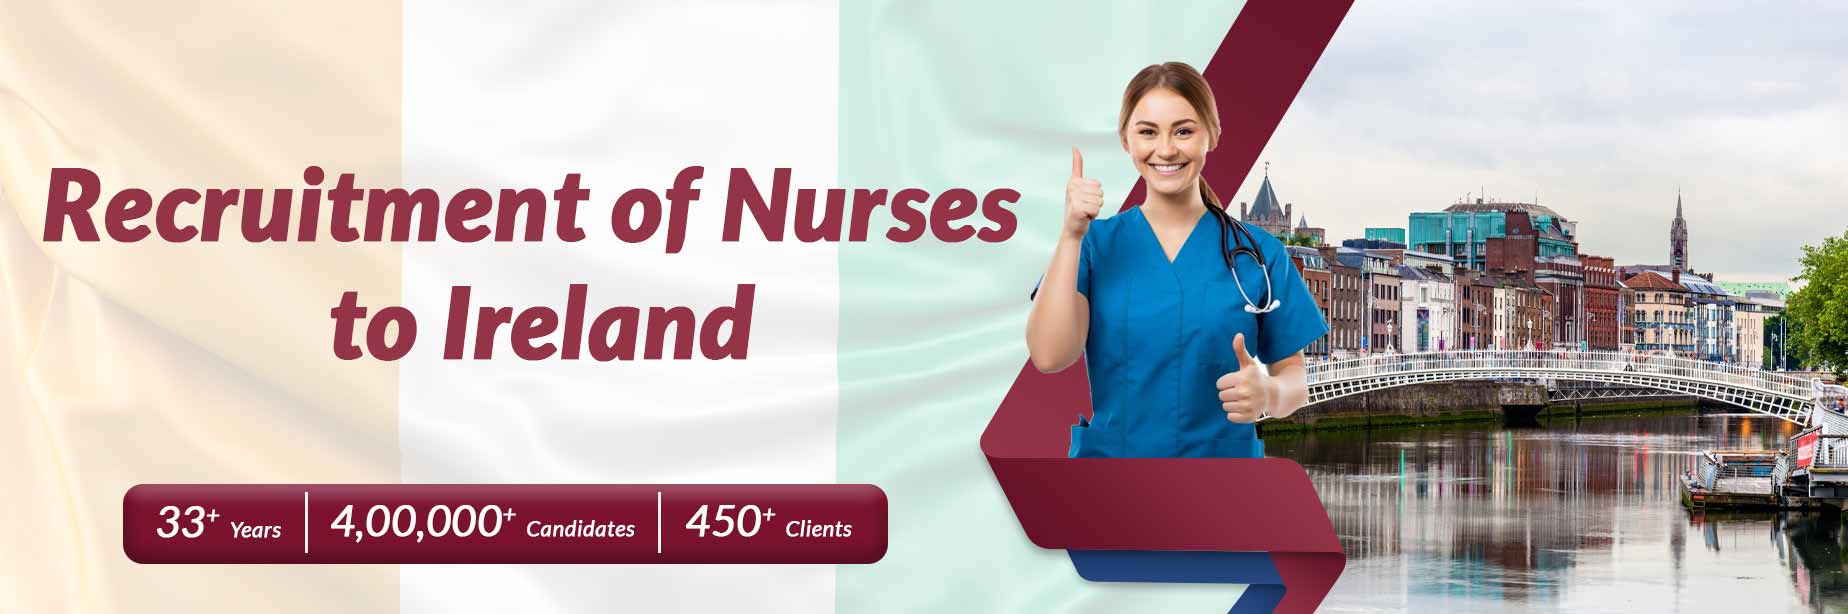 recruitment of nurses to ireland